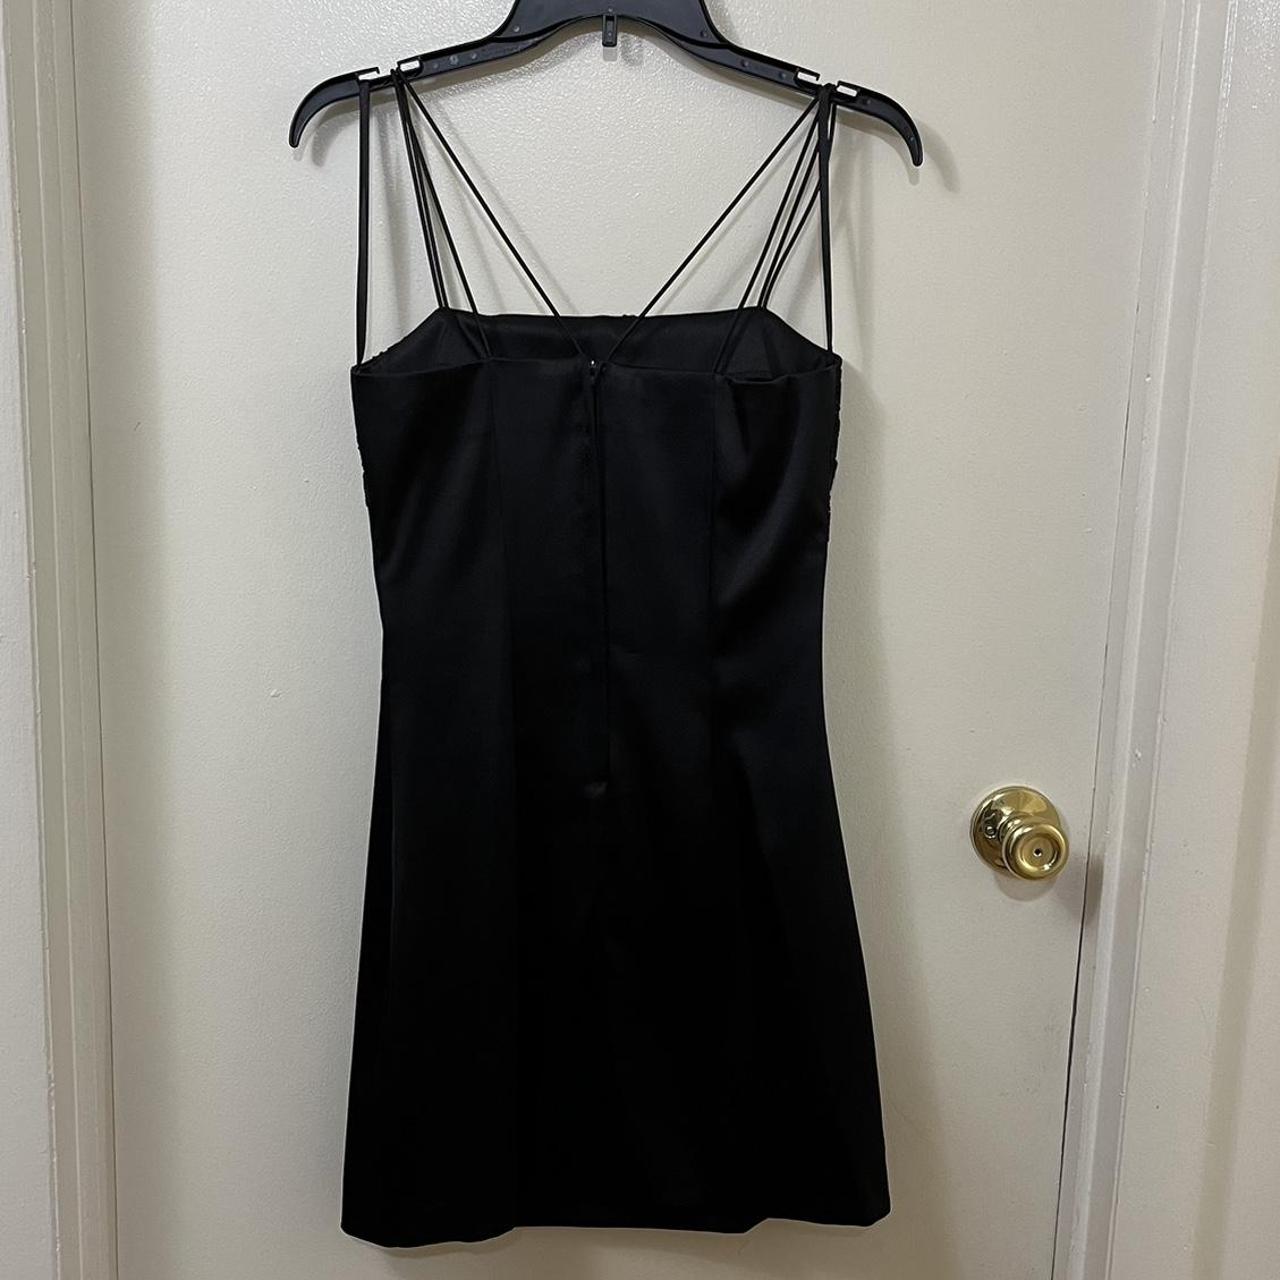 Byer Too! Women's Black Dress | Depop